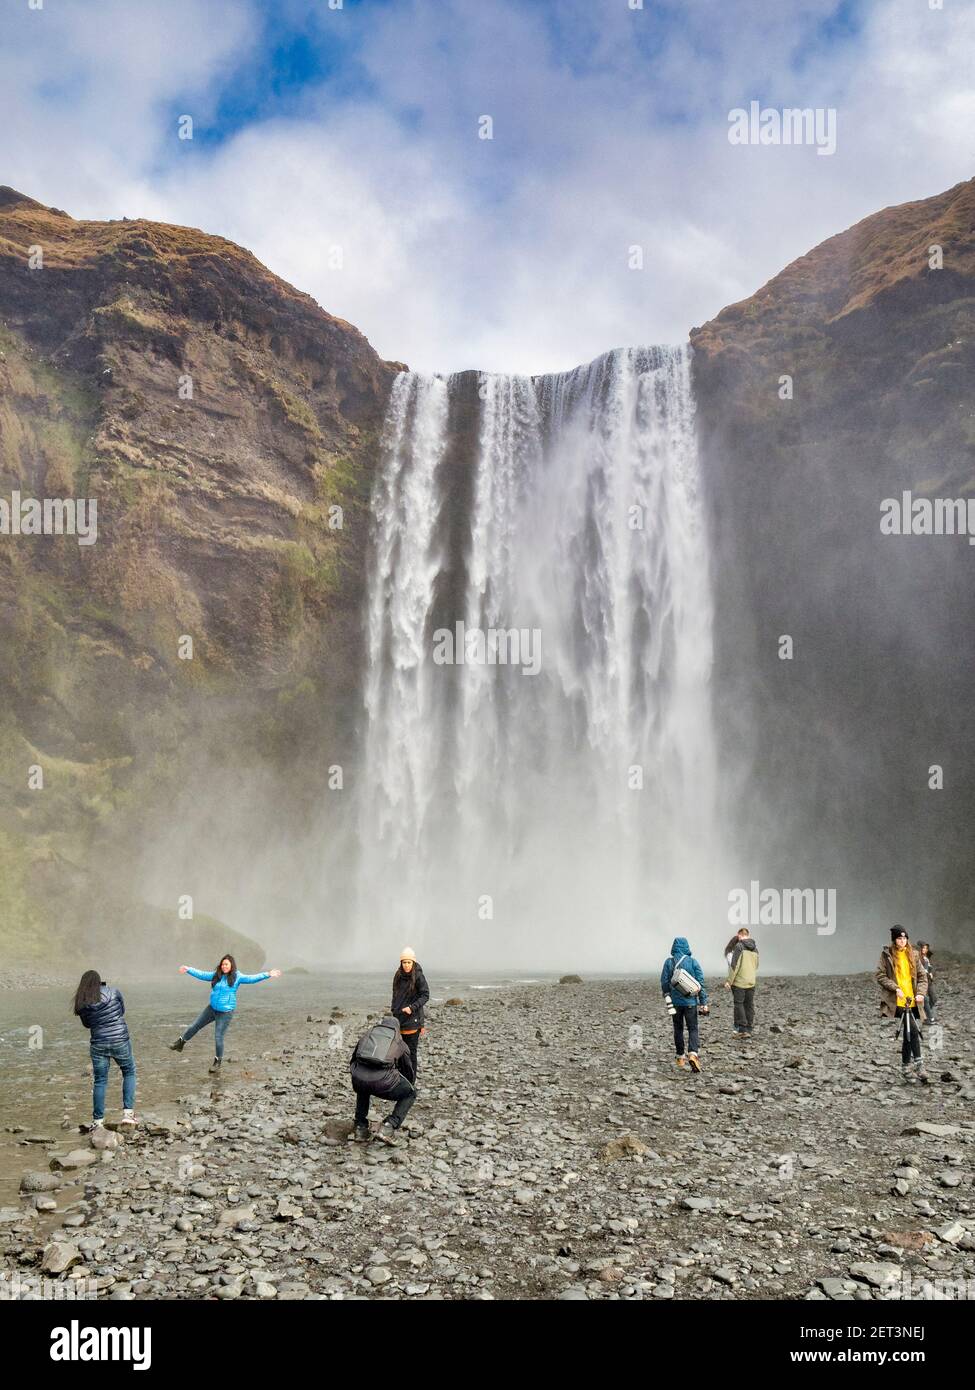 22. April 2018: Skogafoss, Südisland. - Besucher posieren für Fotos am Skogafoss Wasserfall, Süd-Island. Stockfoto